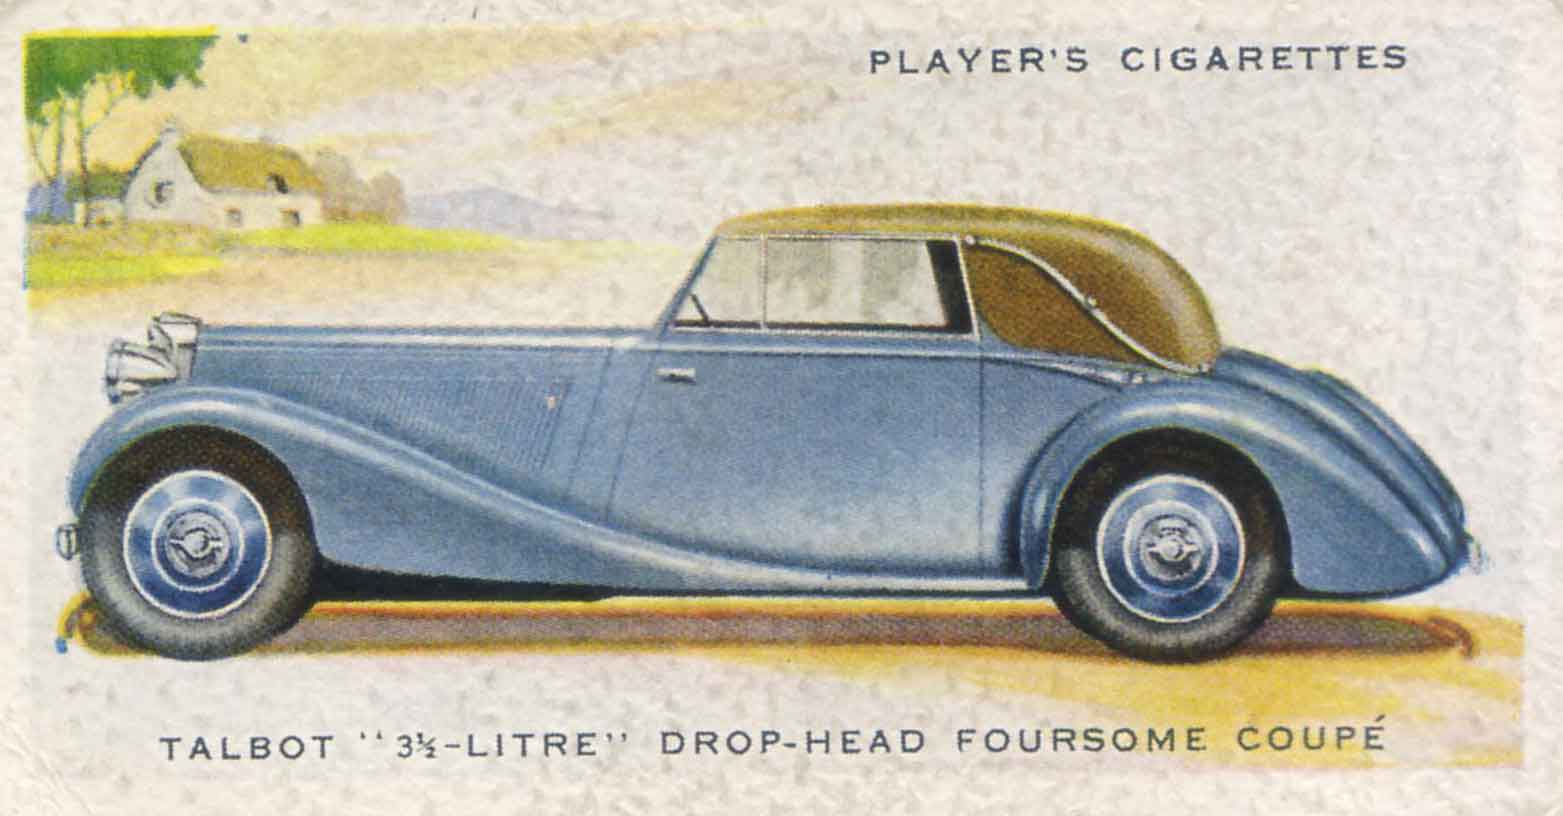 Talbot Drop-Head Foursome. 1937 cigarette card.